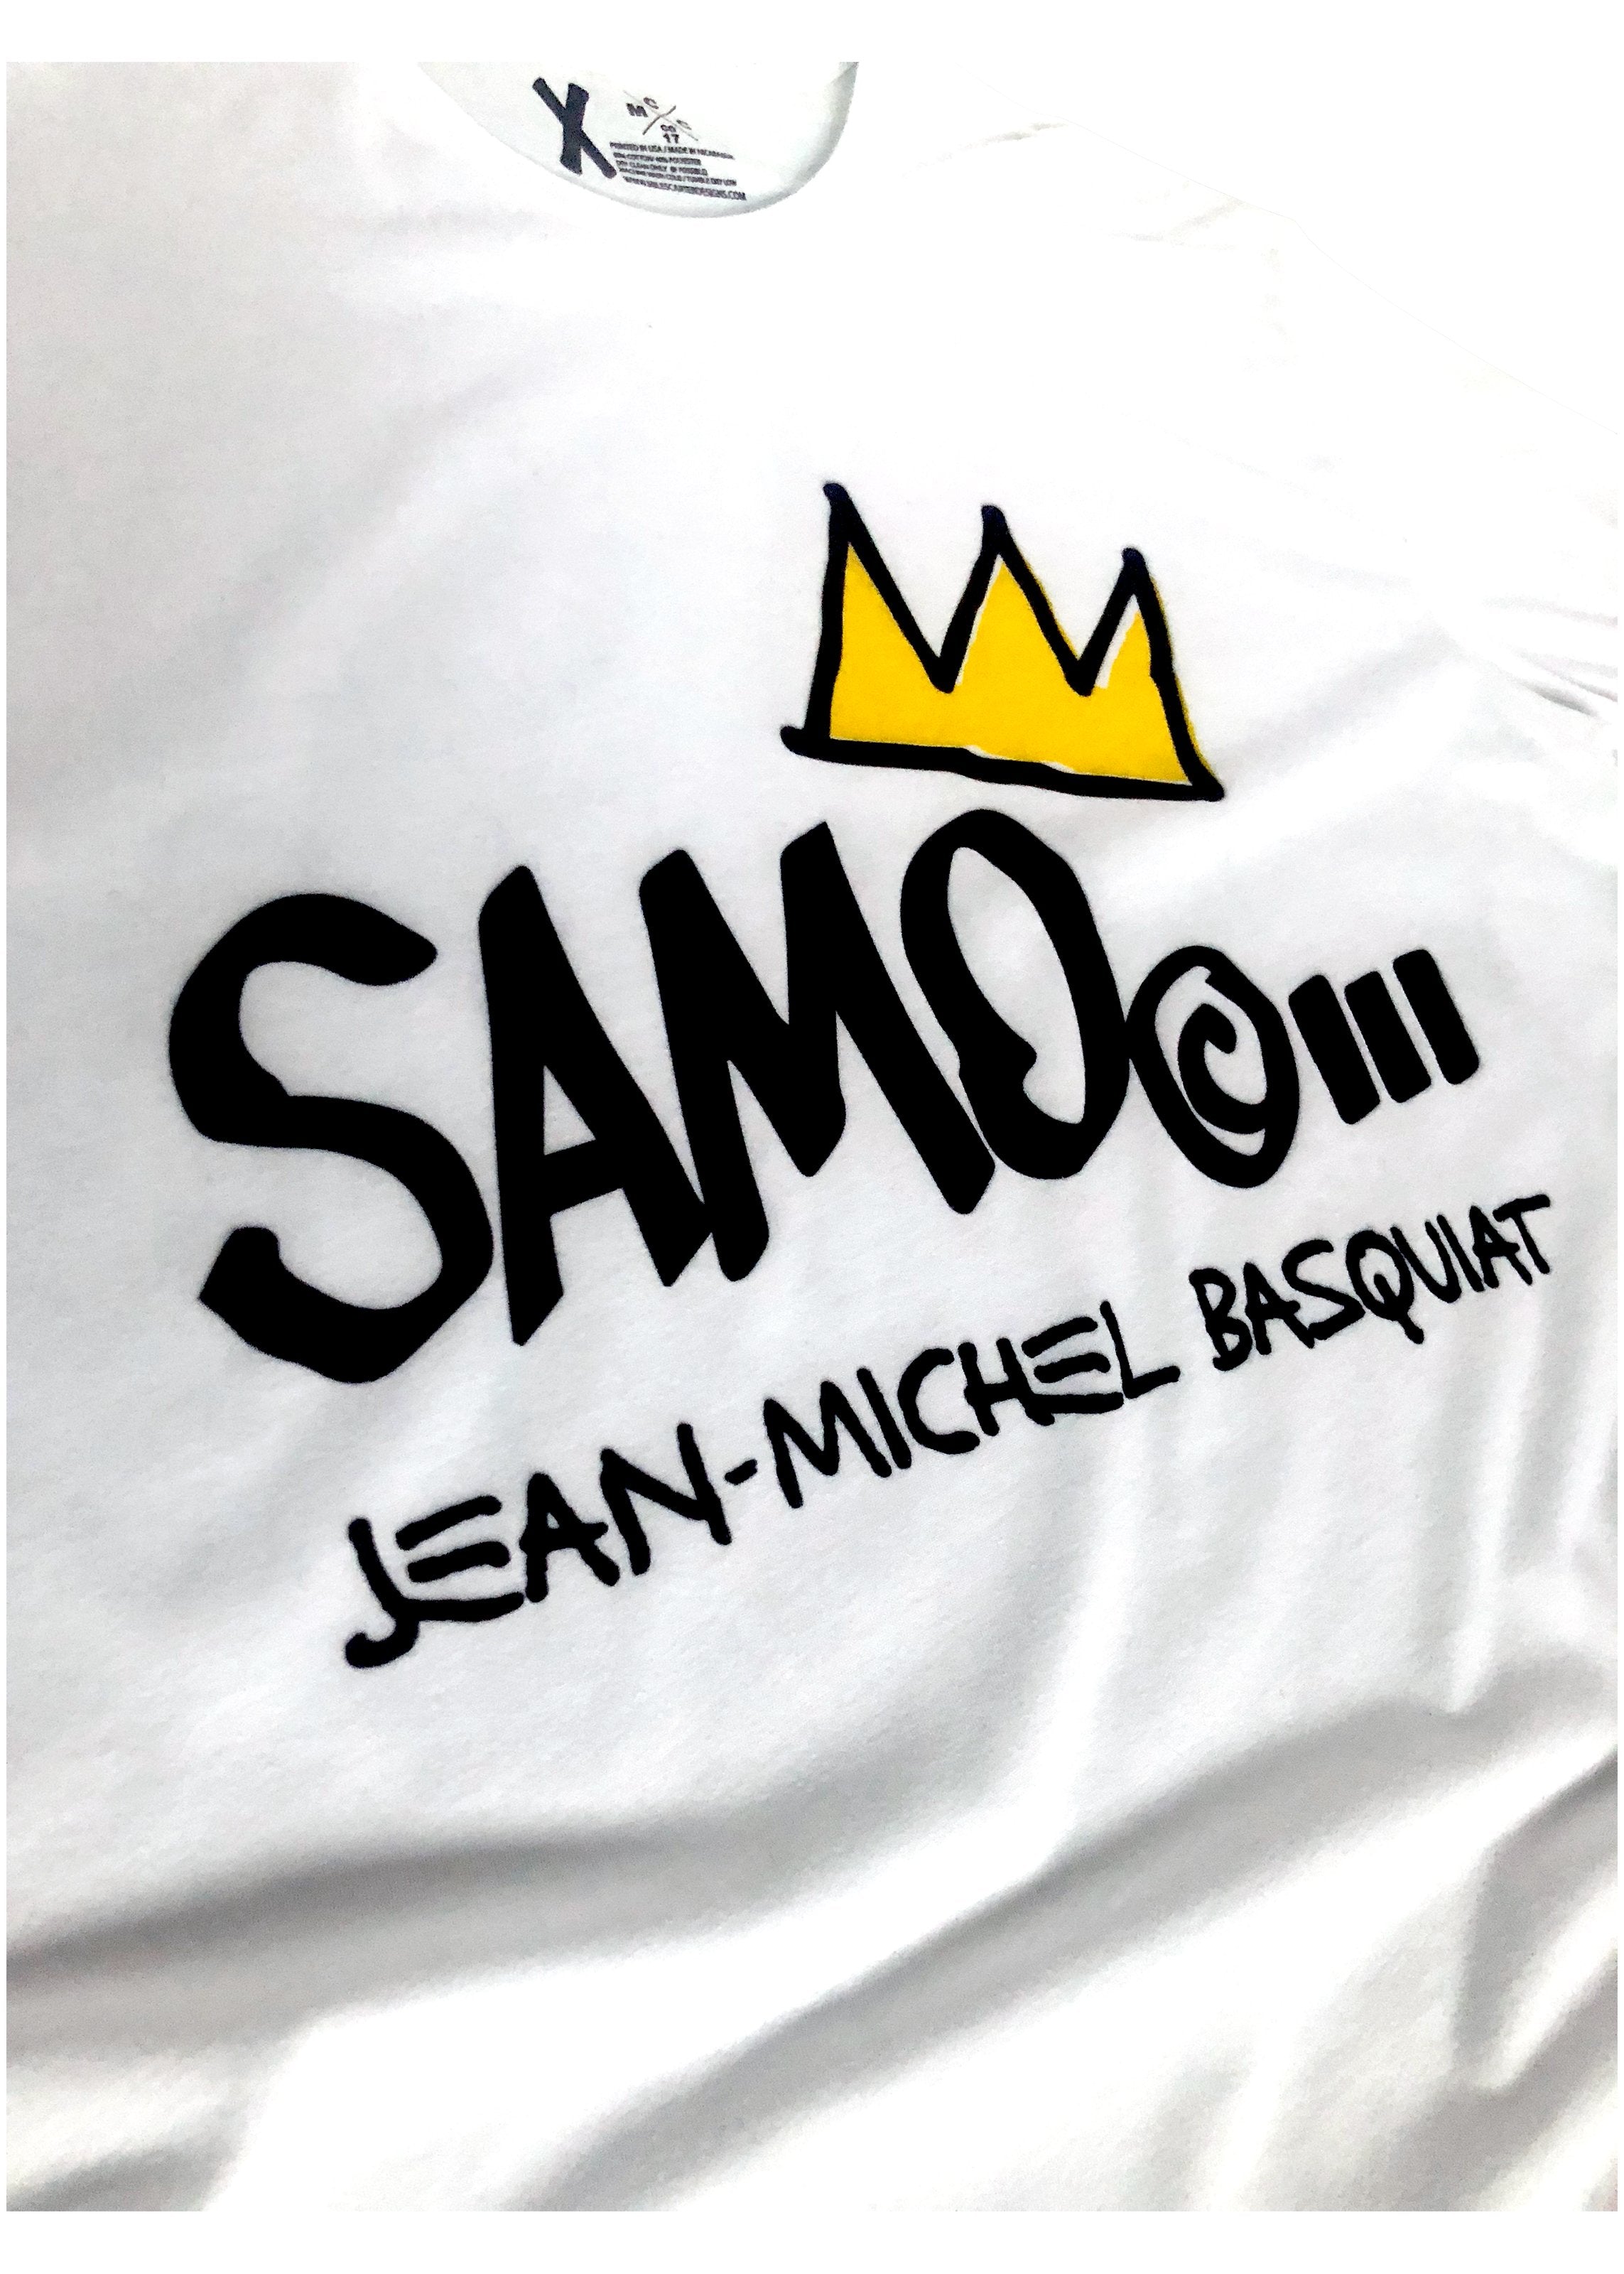 Miles Carter Designs Shirt SAMO - White